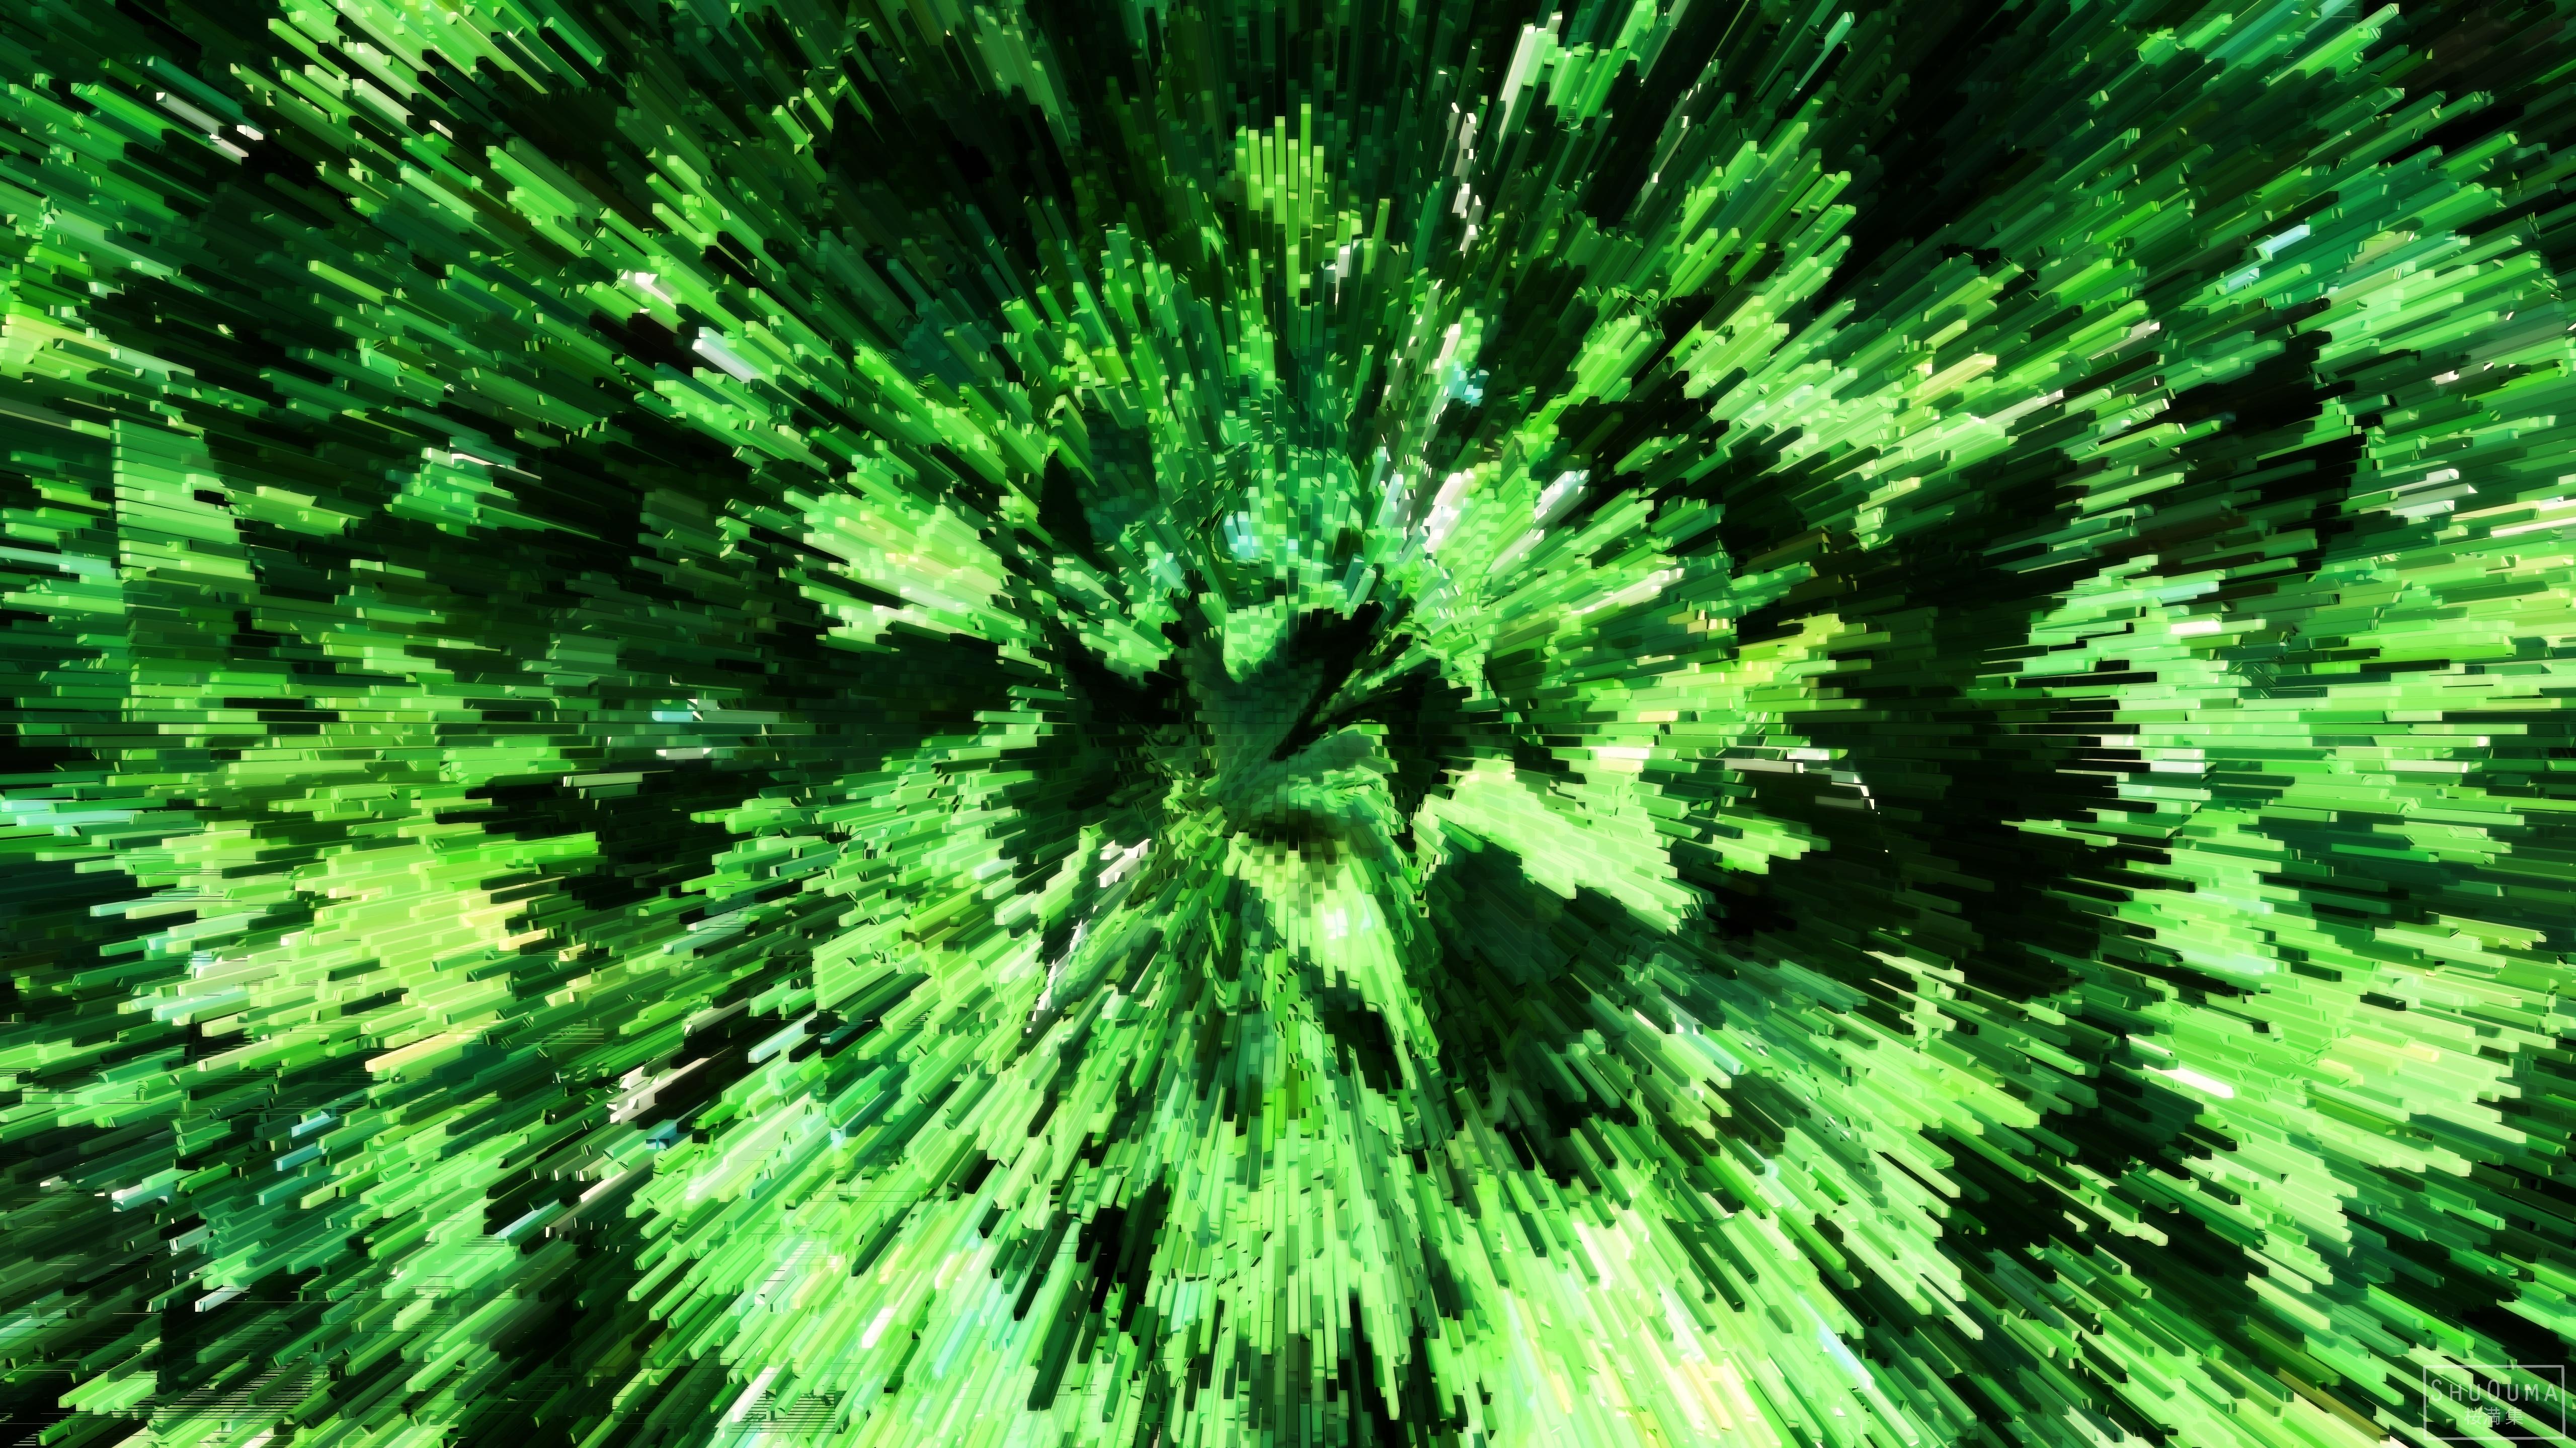 Abstract Green 4k Ultra HD Wallpaper By Shuouma